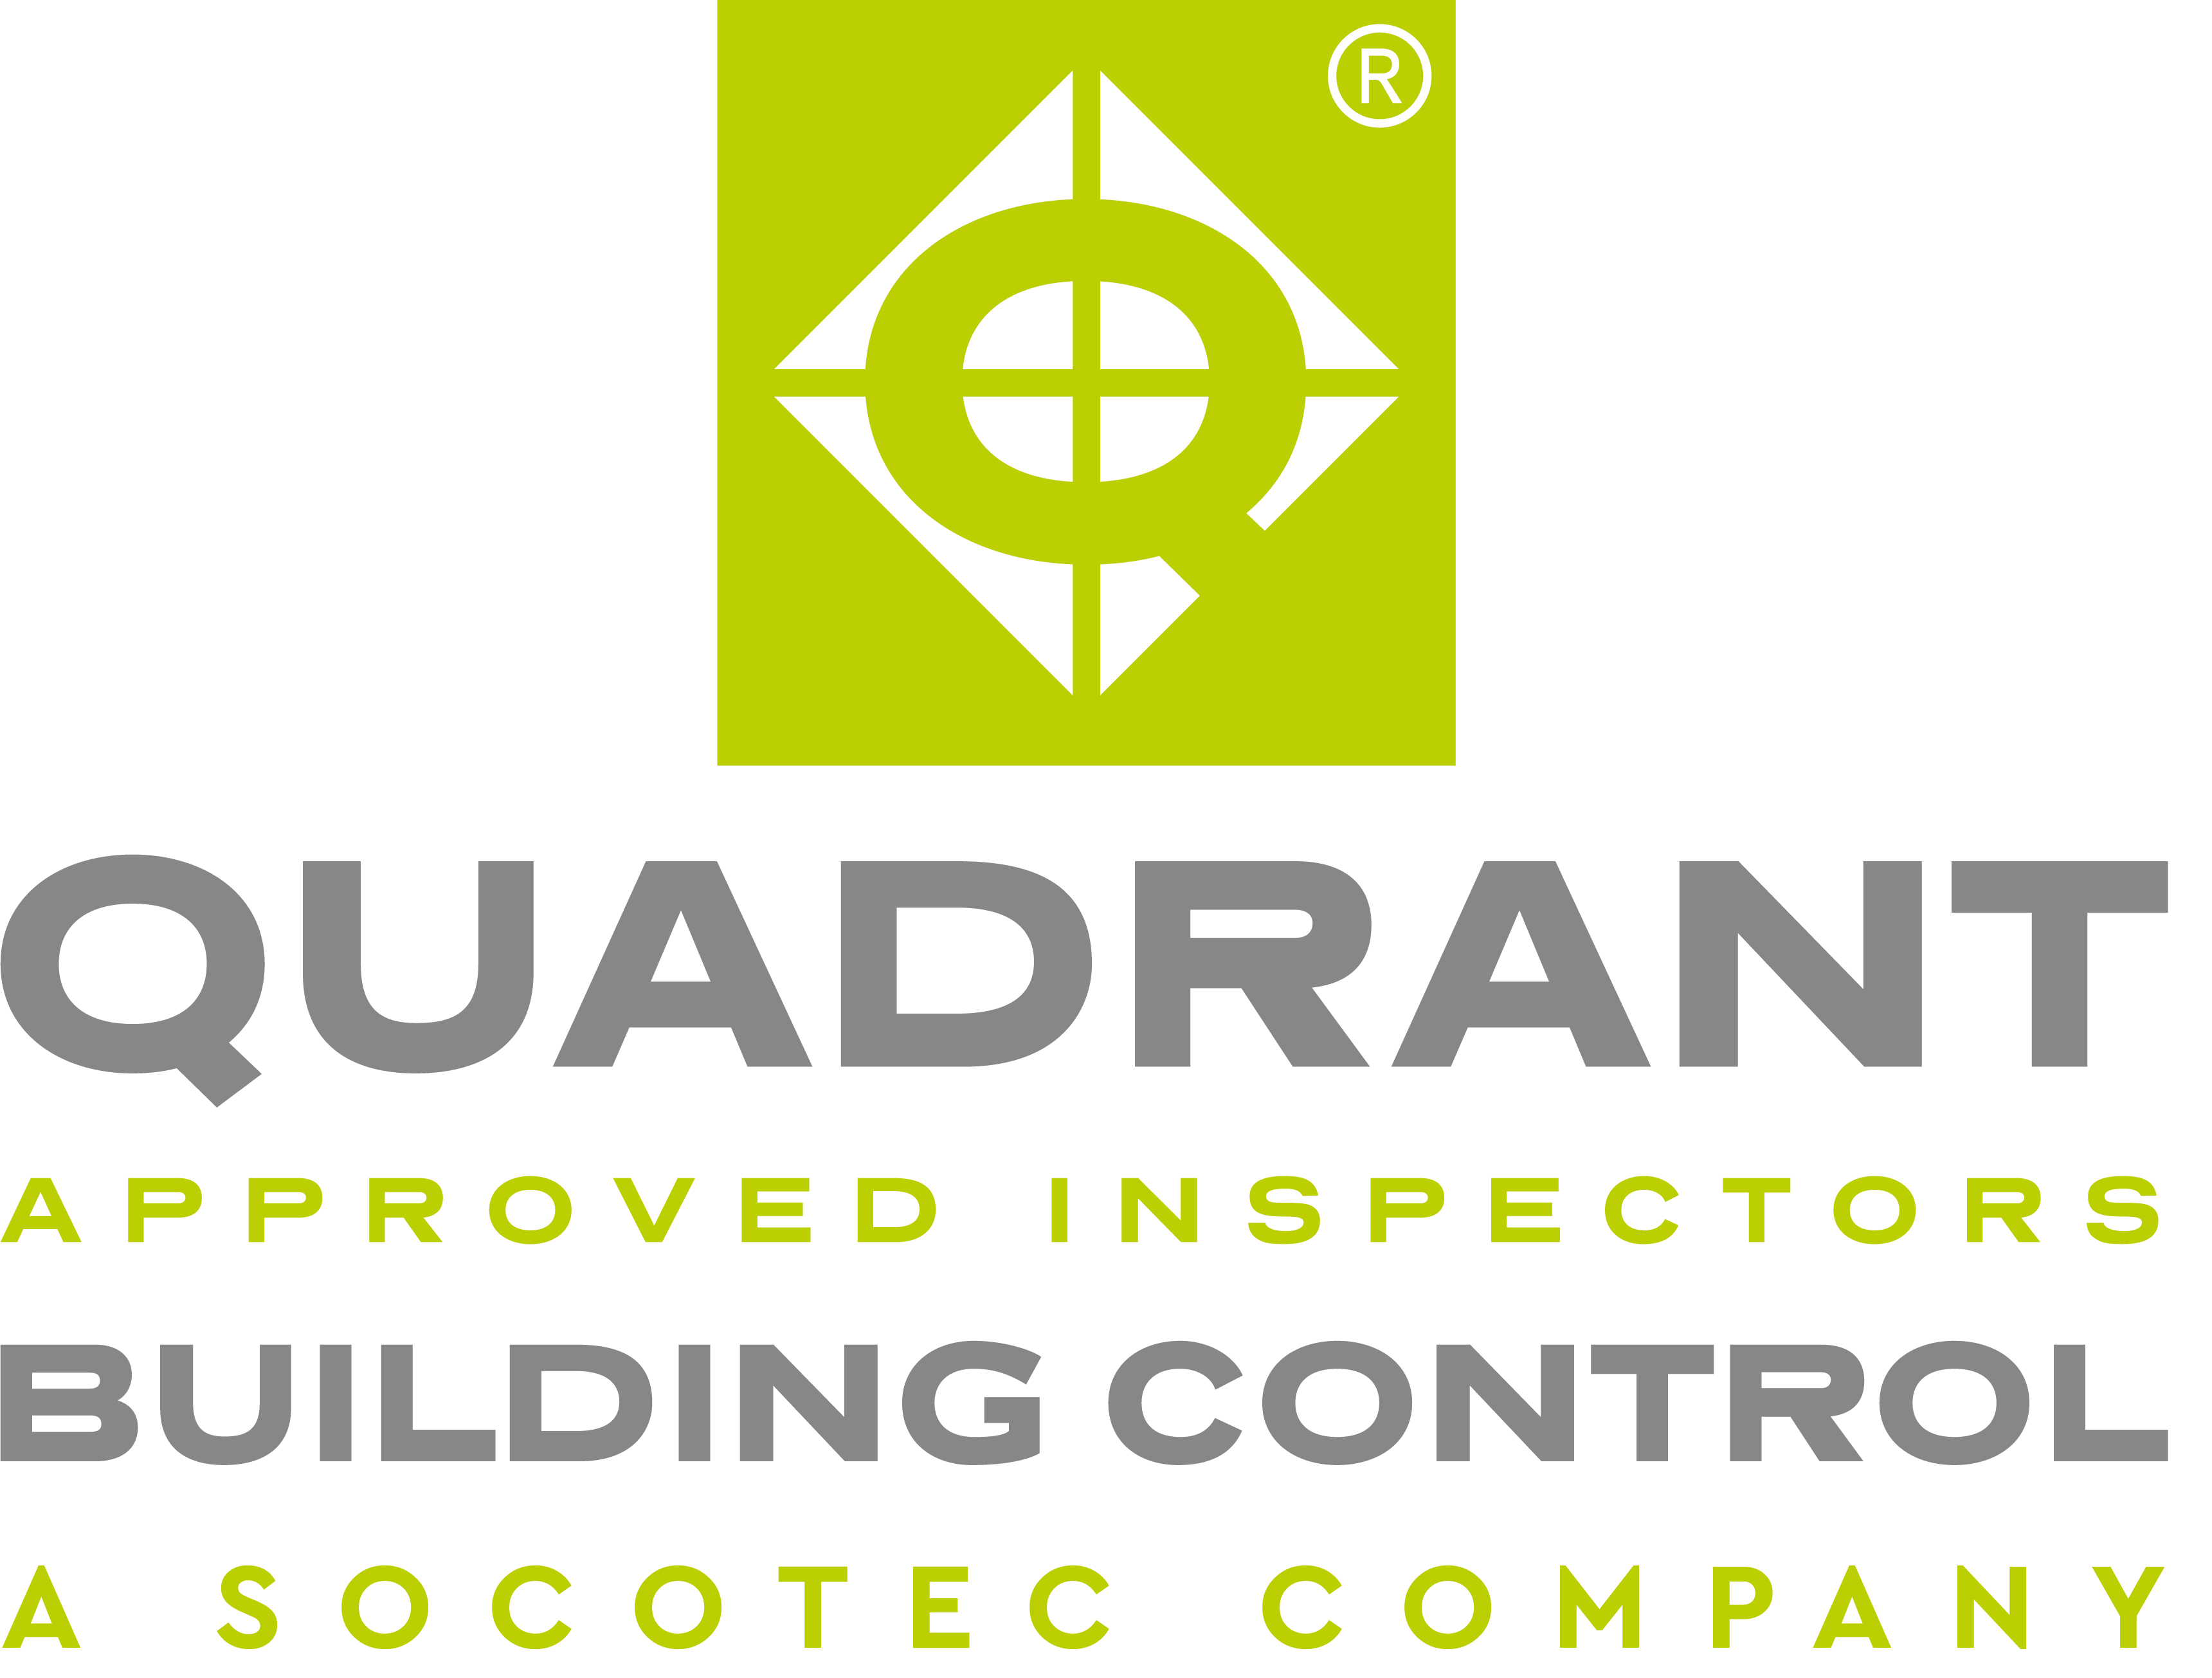 Quadrant Building Control